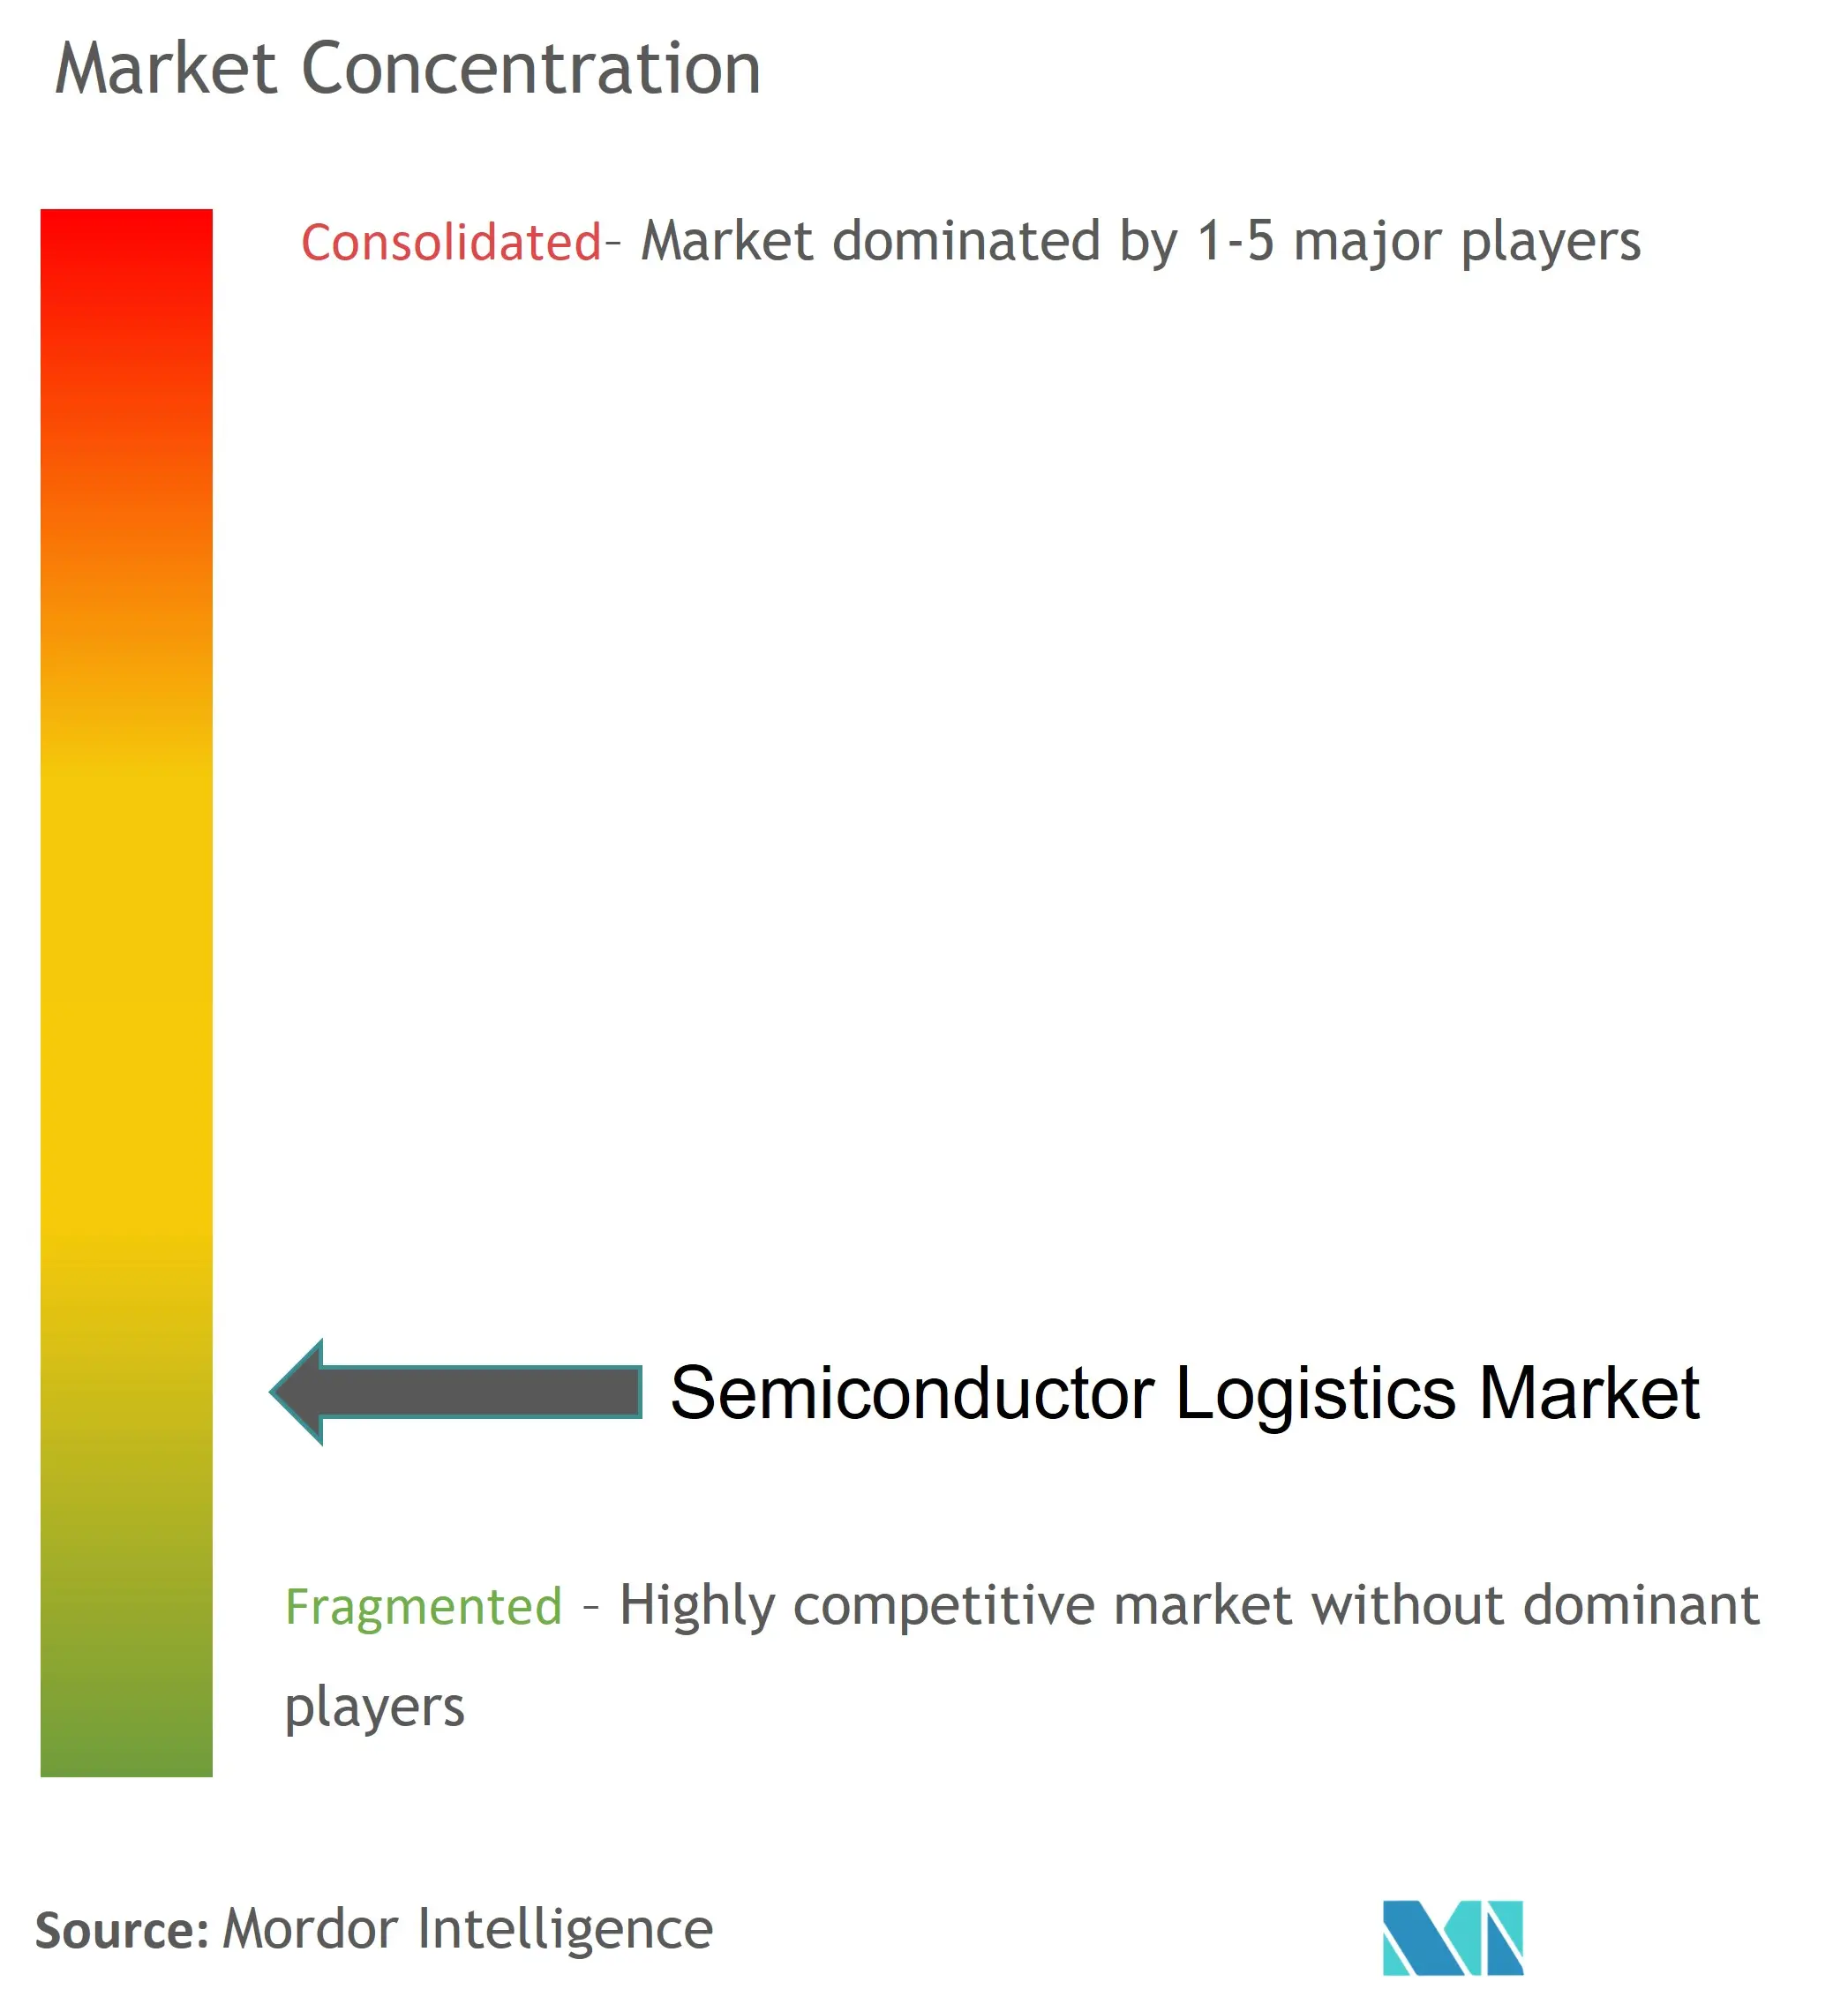 Semiconductor Logistics Market Concentration